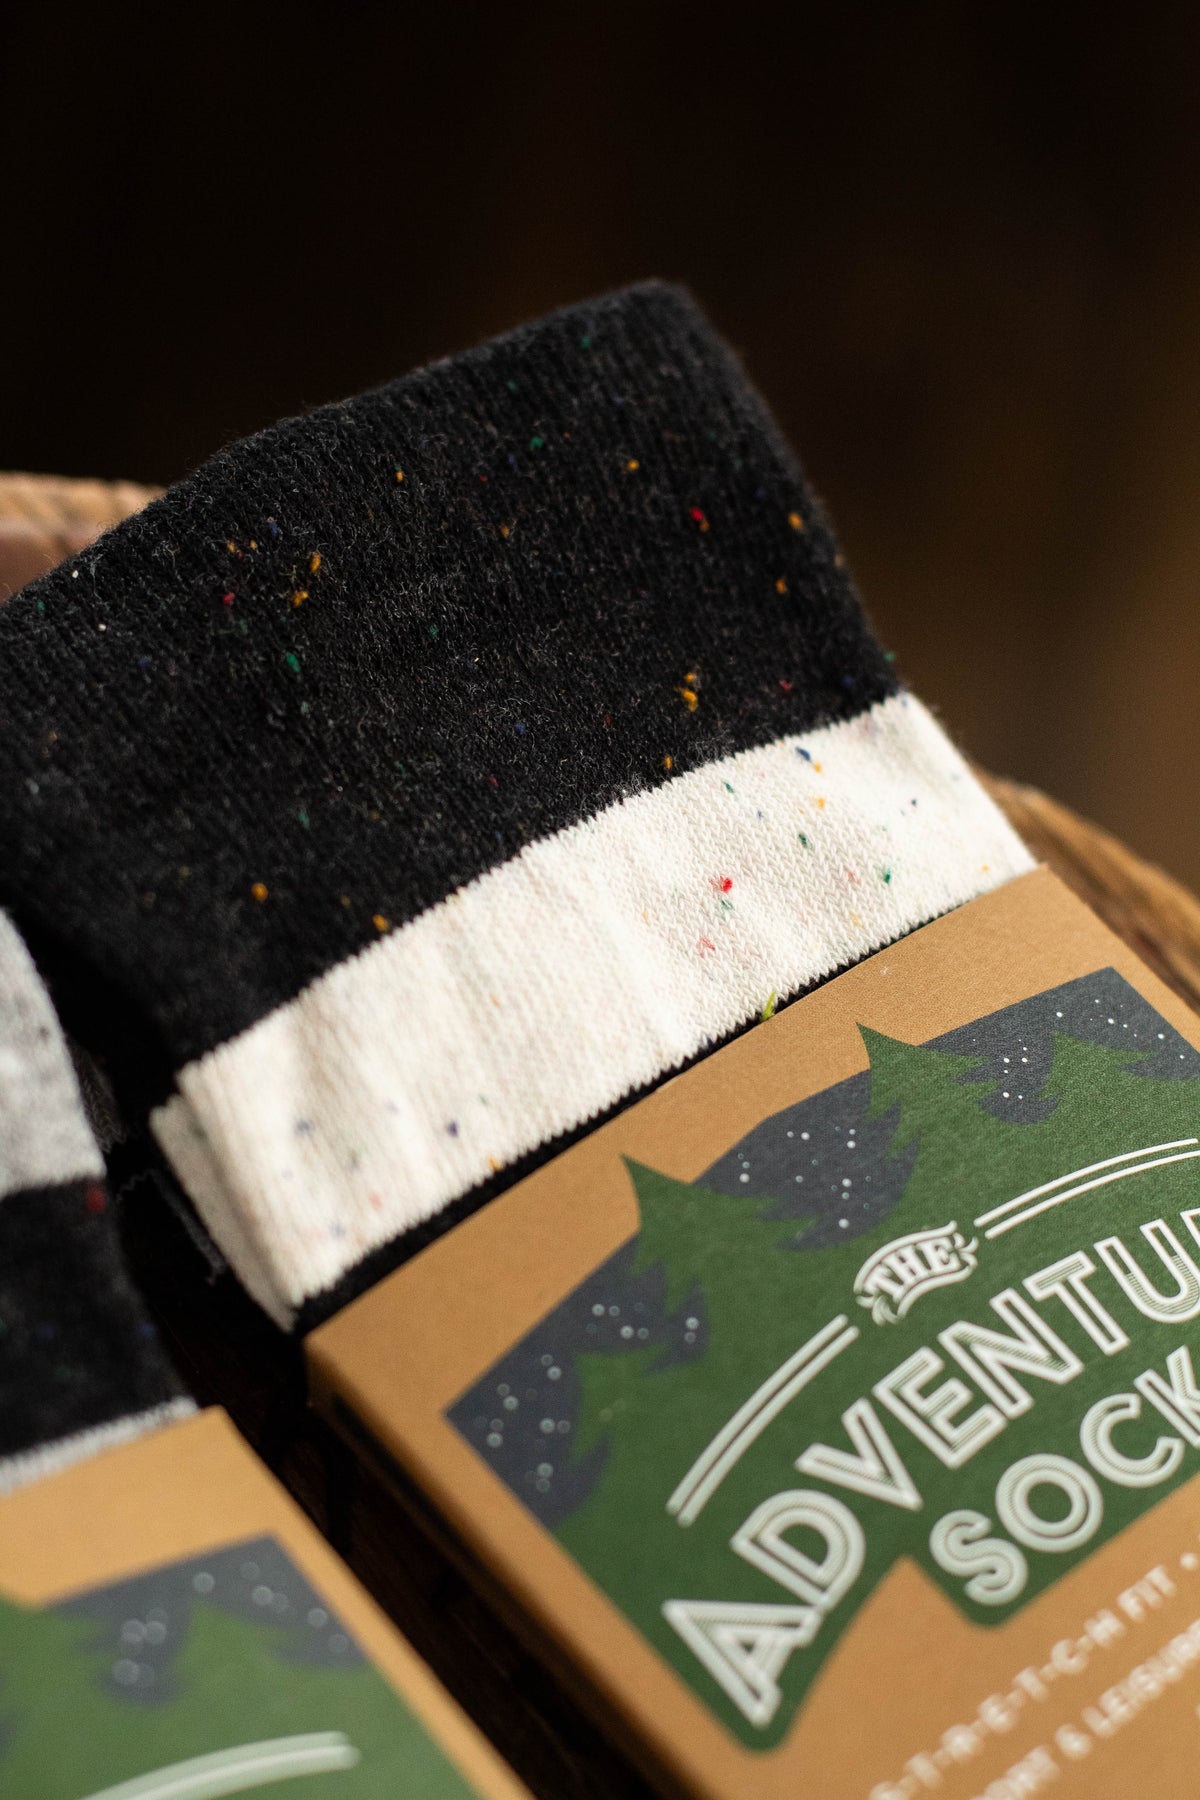 The Adventure Sock - Super Fine Gauge Recycled Cotton Sock